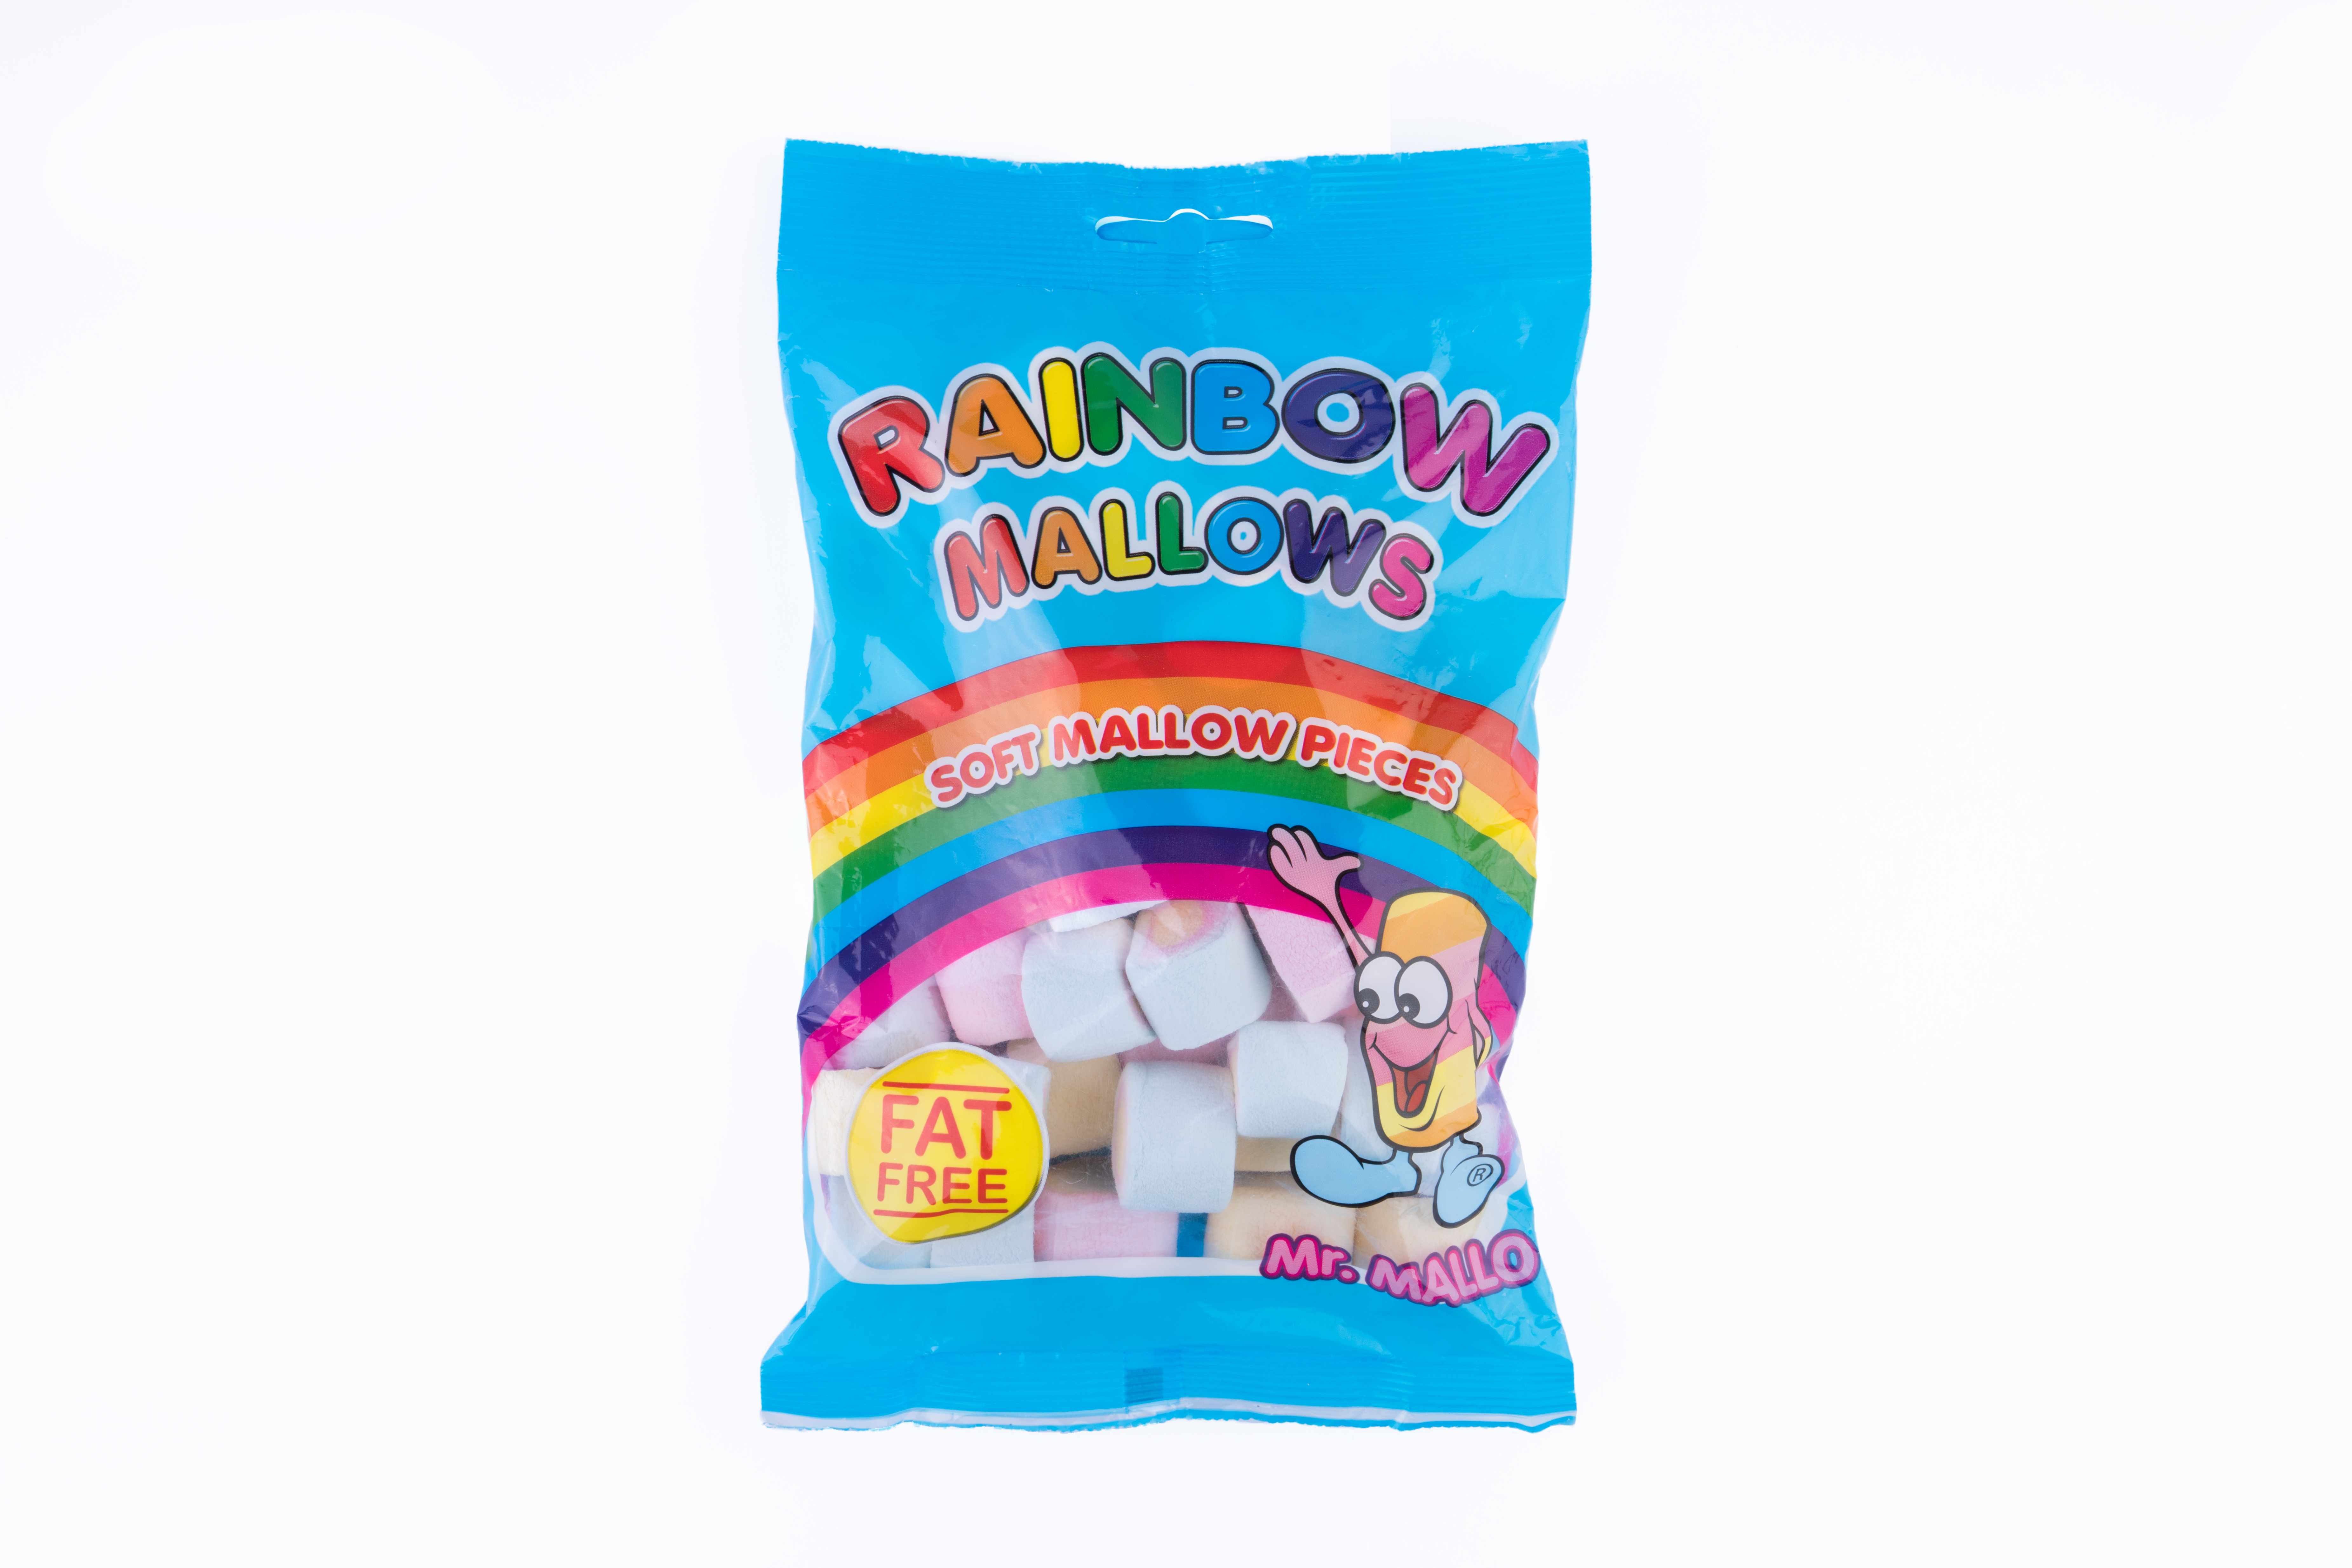 Mr. Mallo pillow bag 150g - 220g (rainbow mallows)